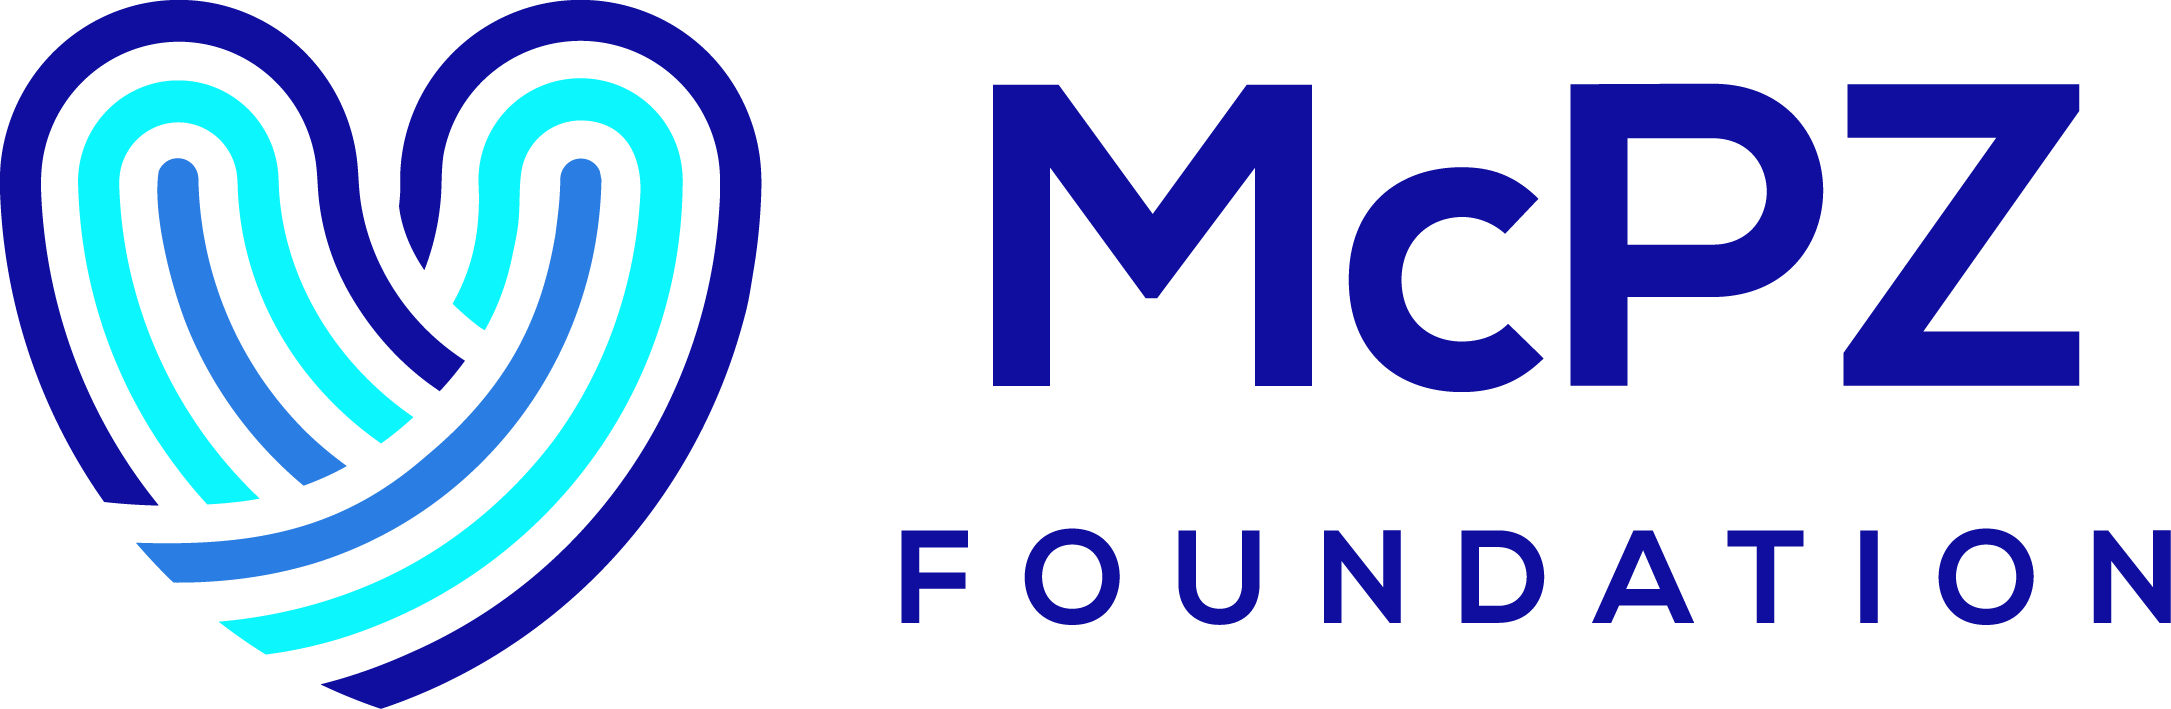 McPZ Foundation